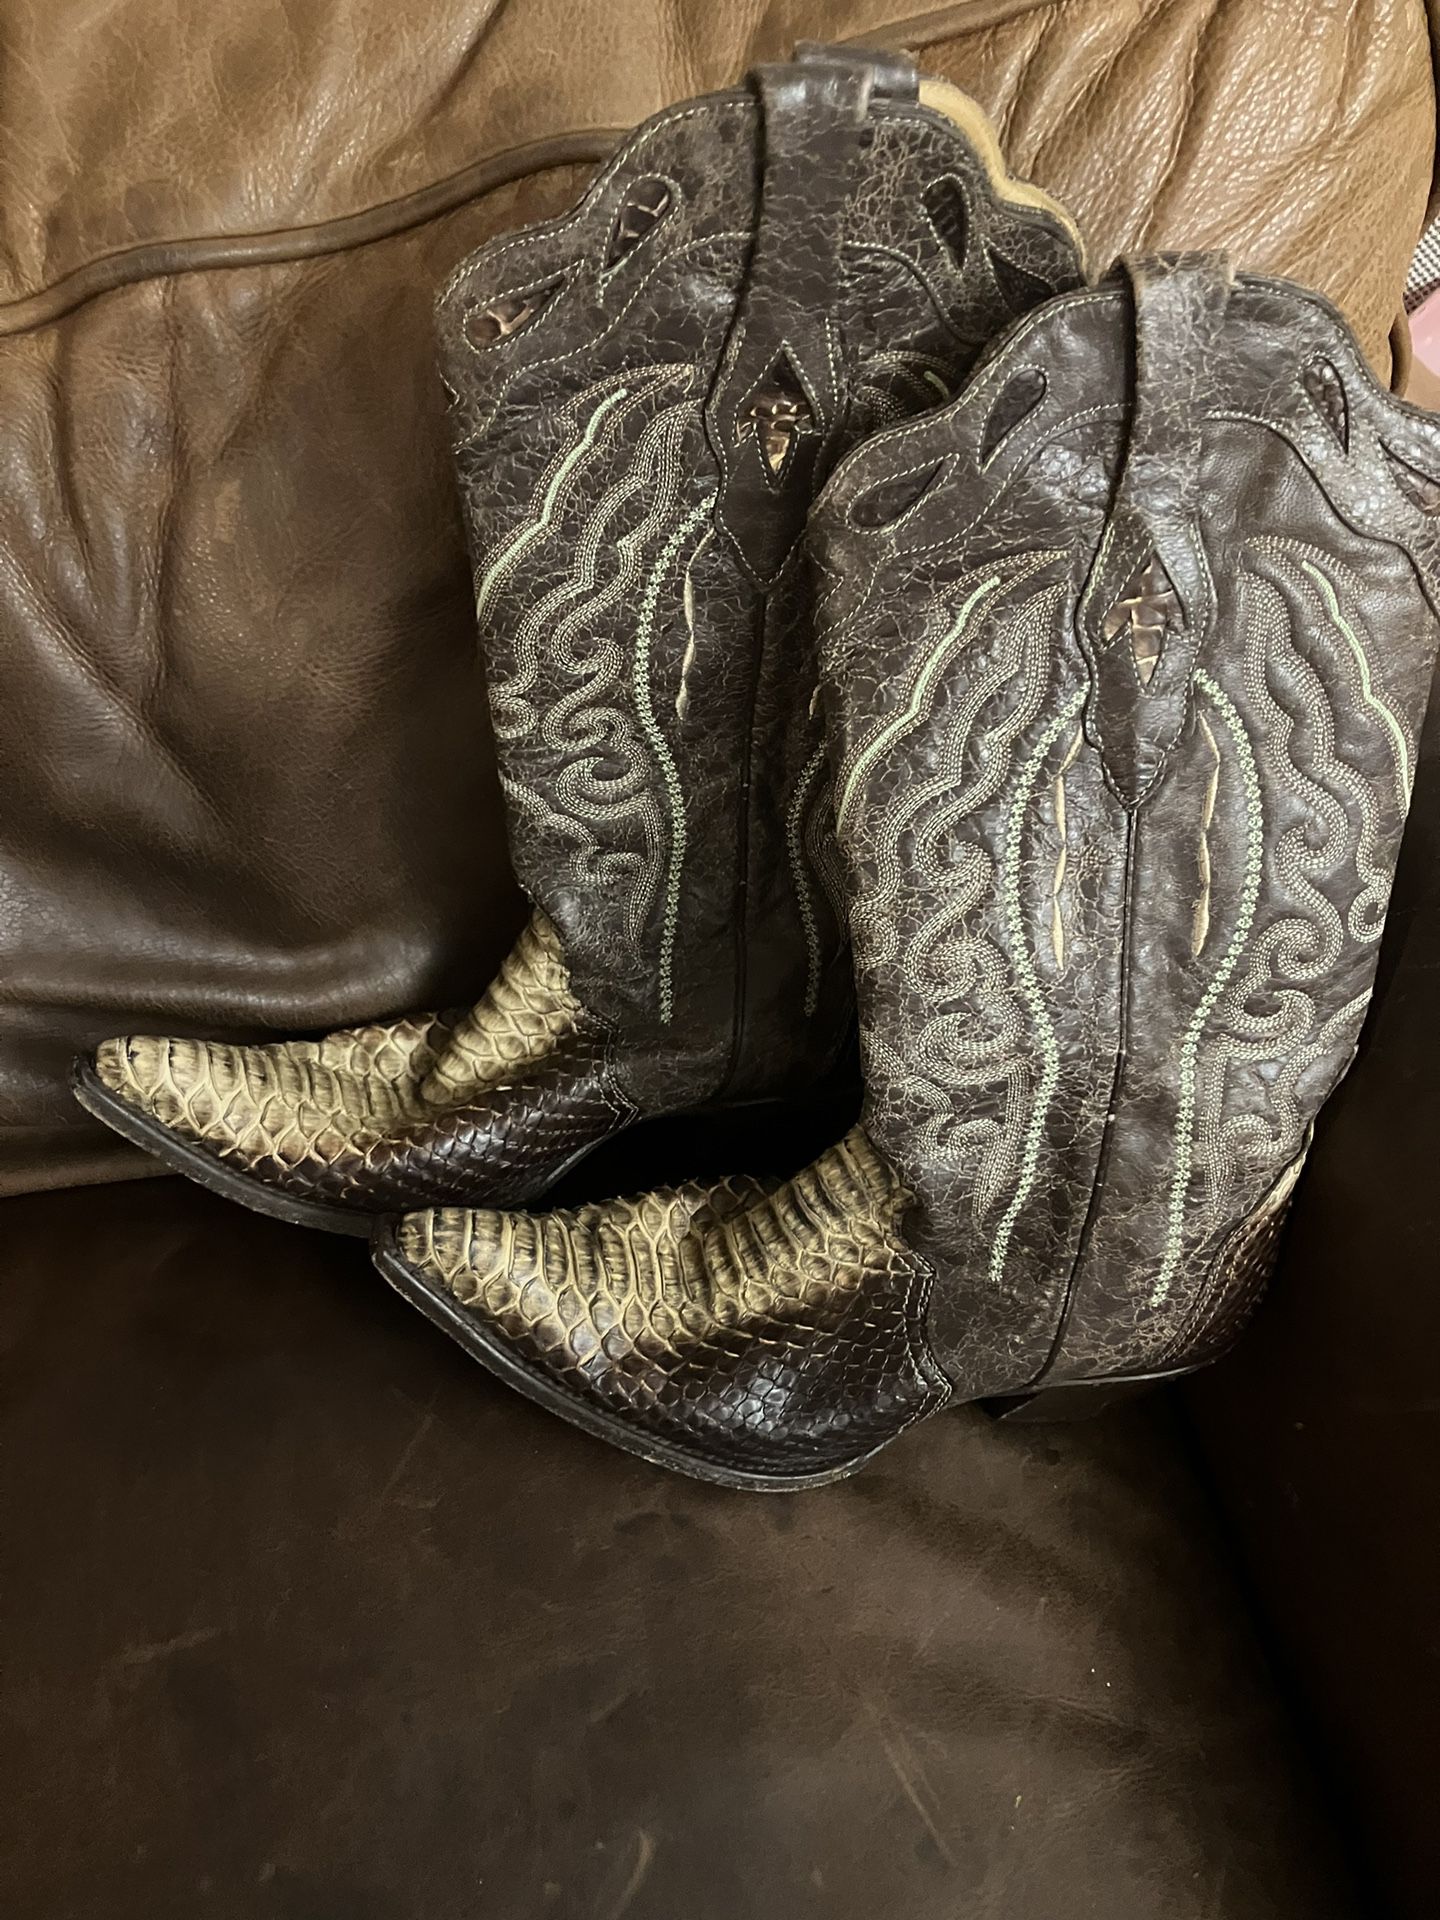 Snakeskin Cowboy Boots